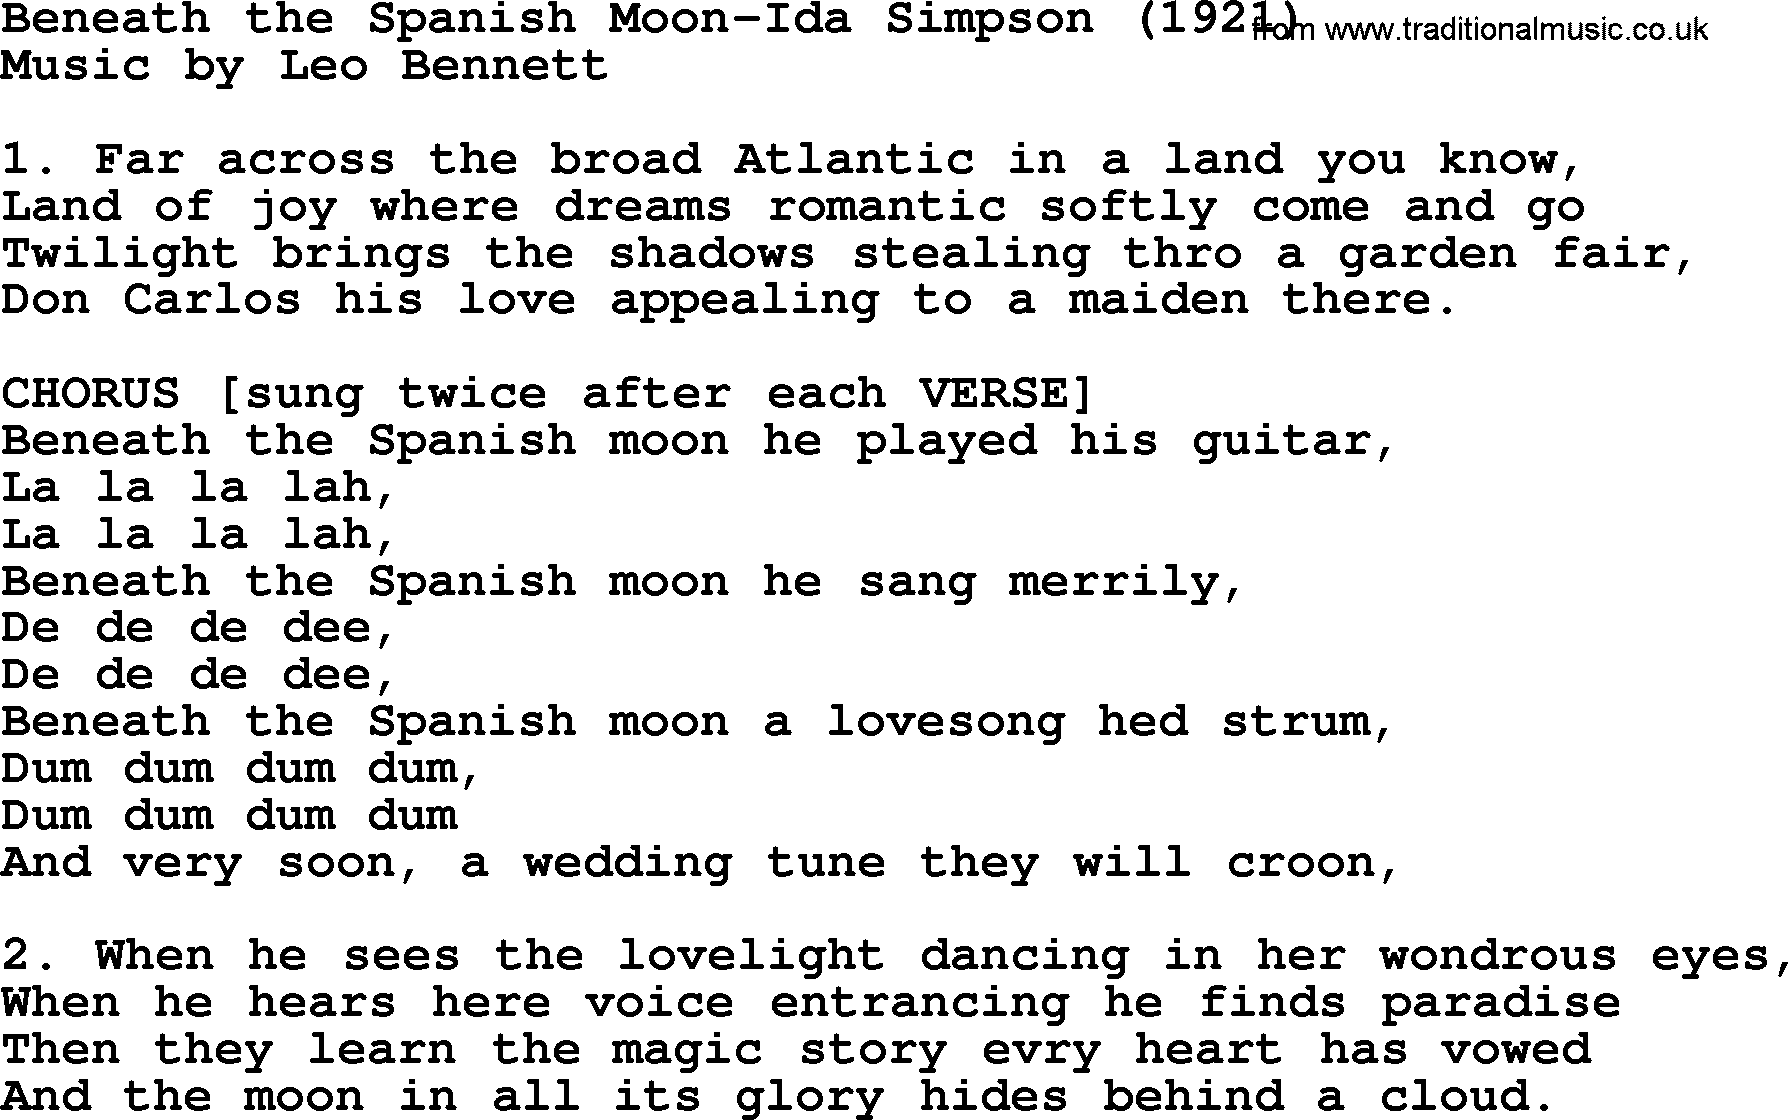 World War(WW1) One Song: Beneath The Spanish Moon-Ida Simpson 1921, lyrics and PDF